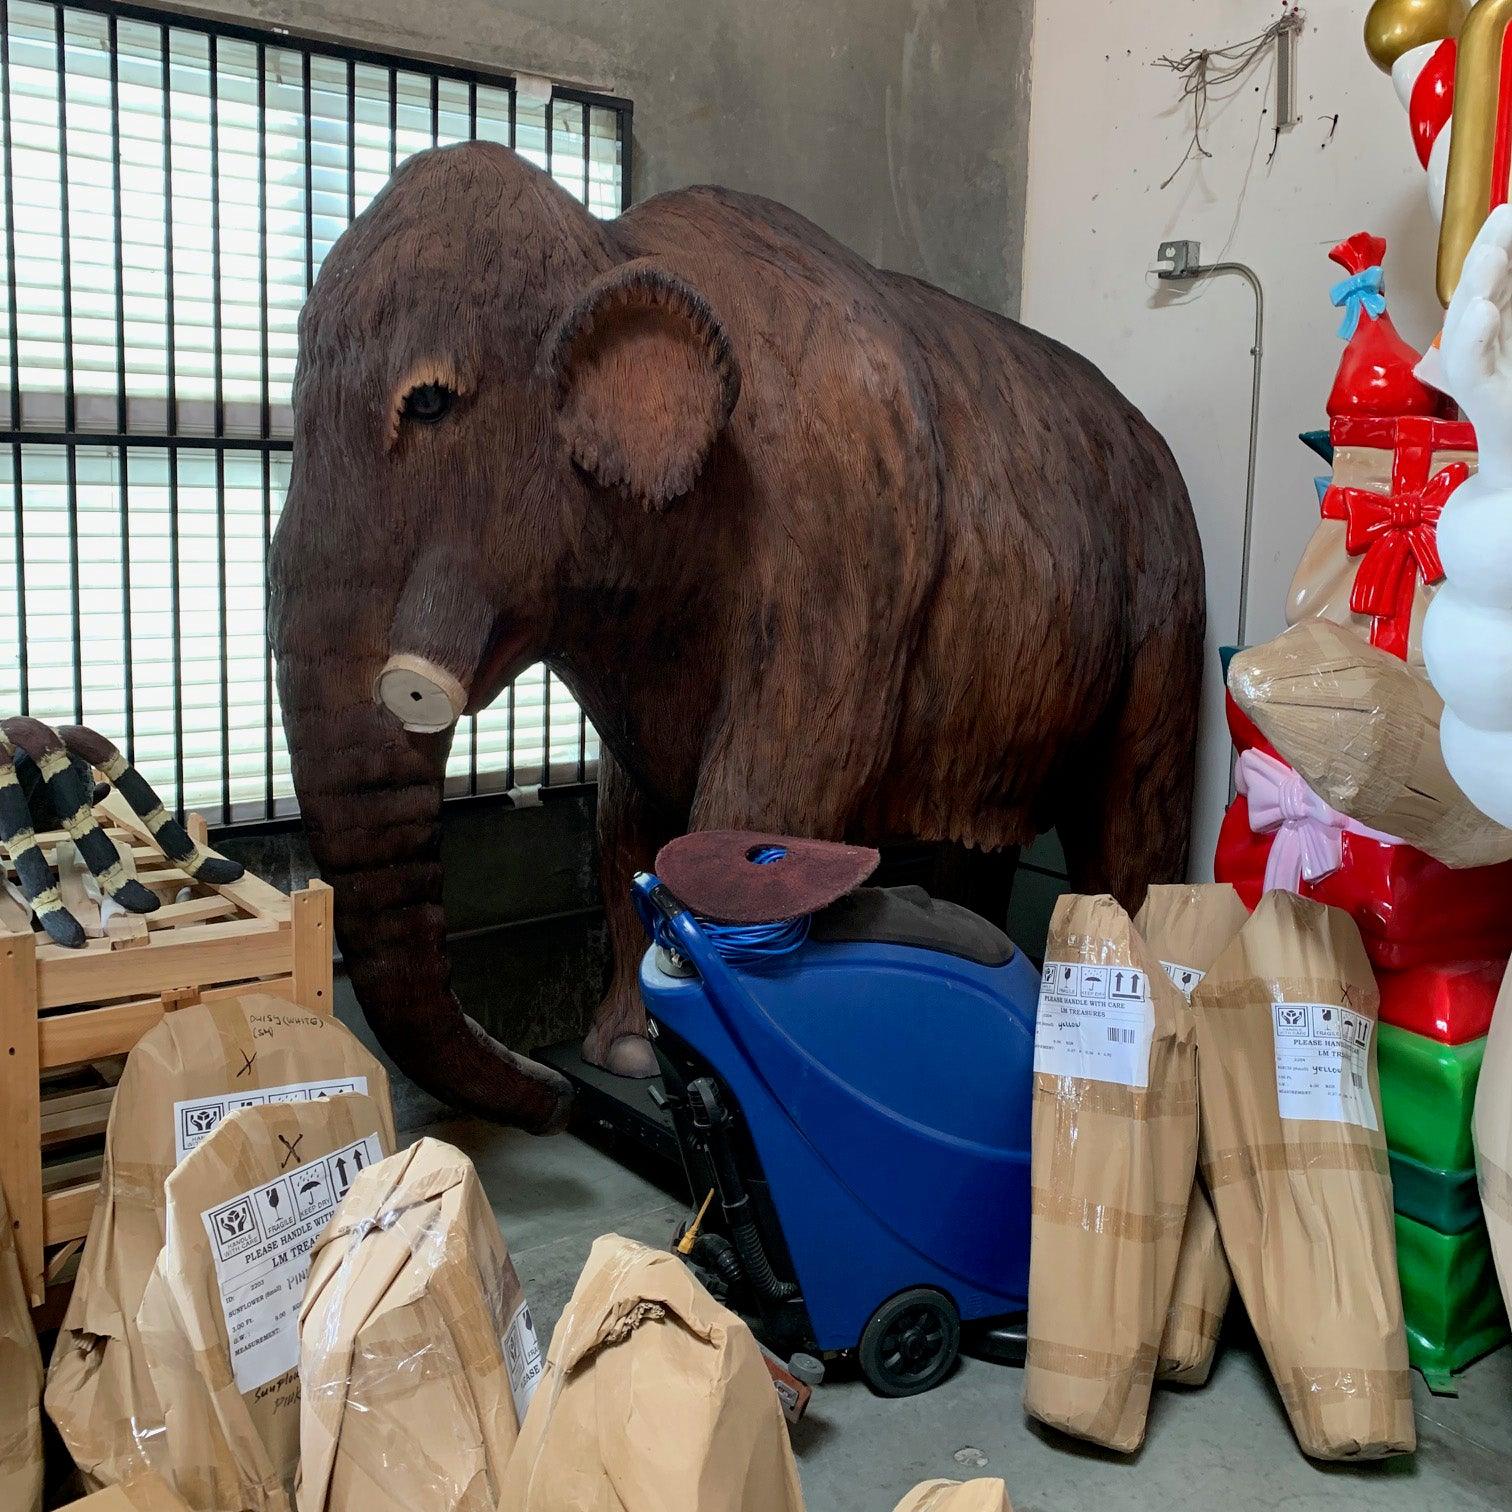 Mammoth Life Size Statue - LM Treasures Prop Rentals 